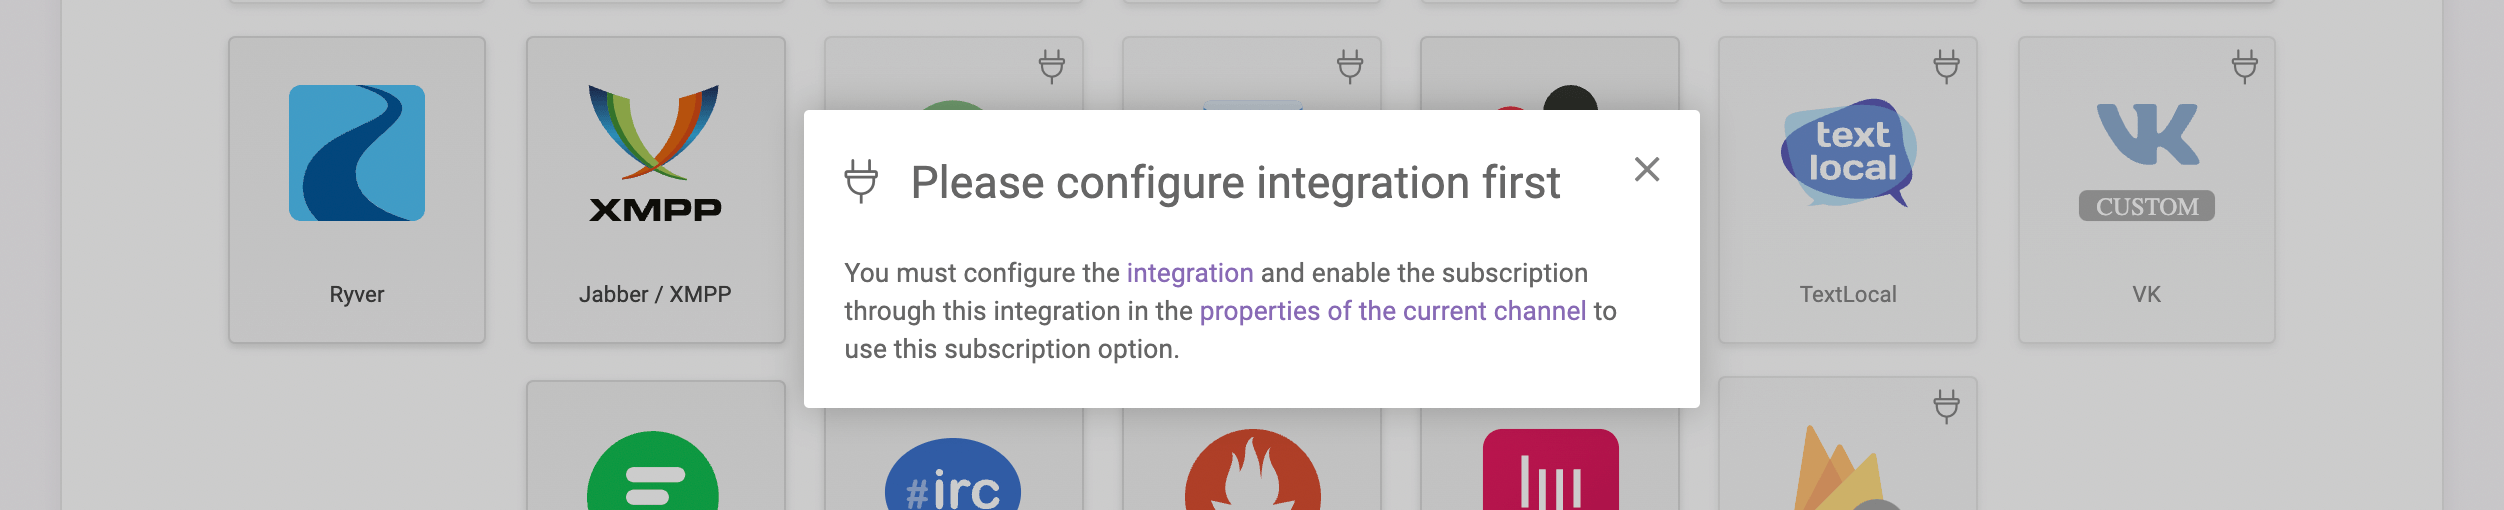 0 Setting up integration - Configure Integration message.png